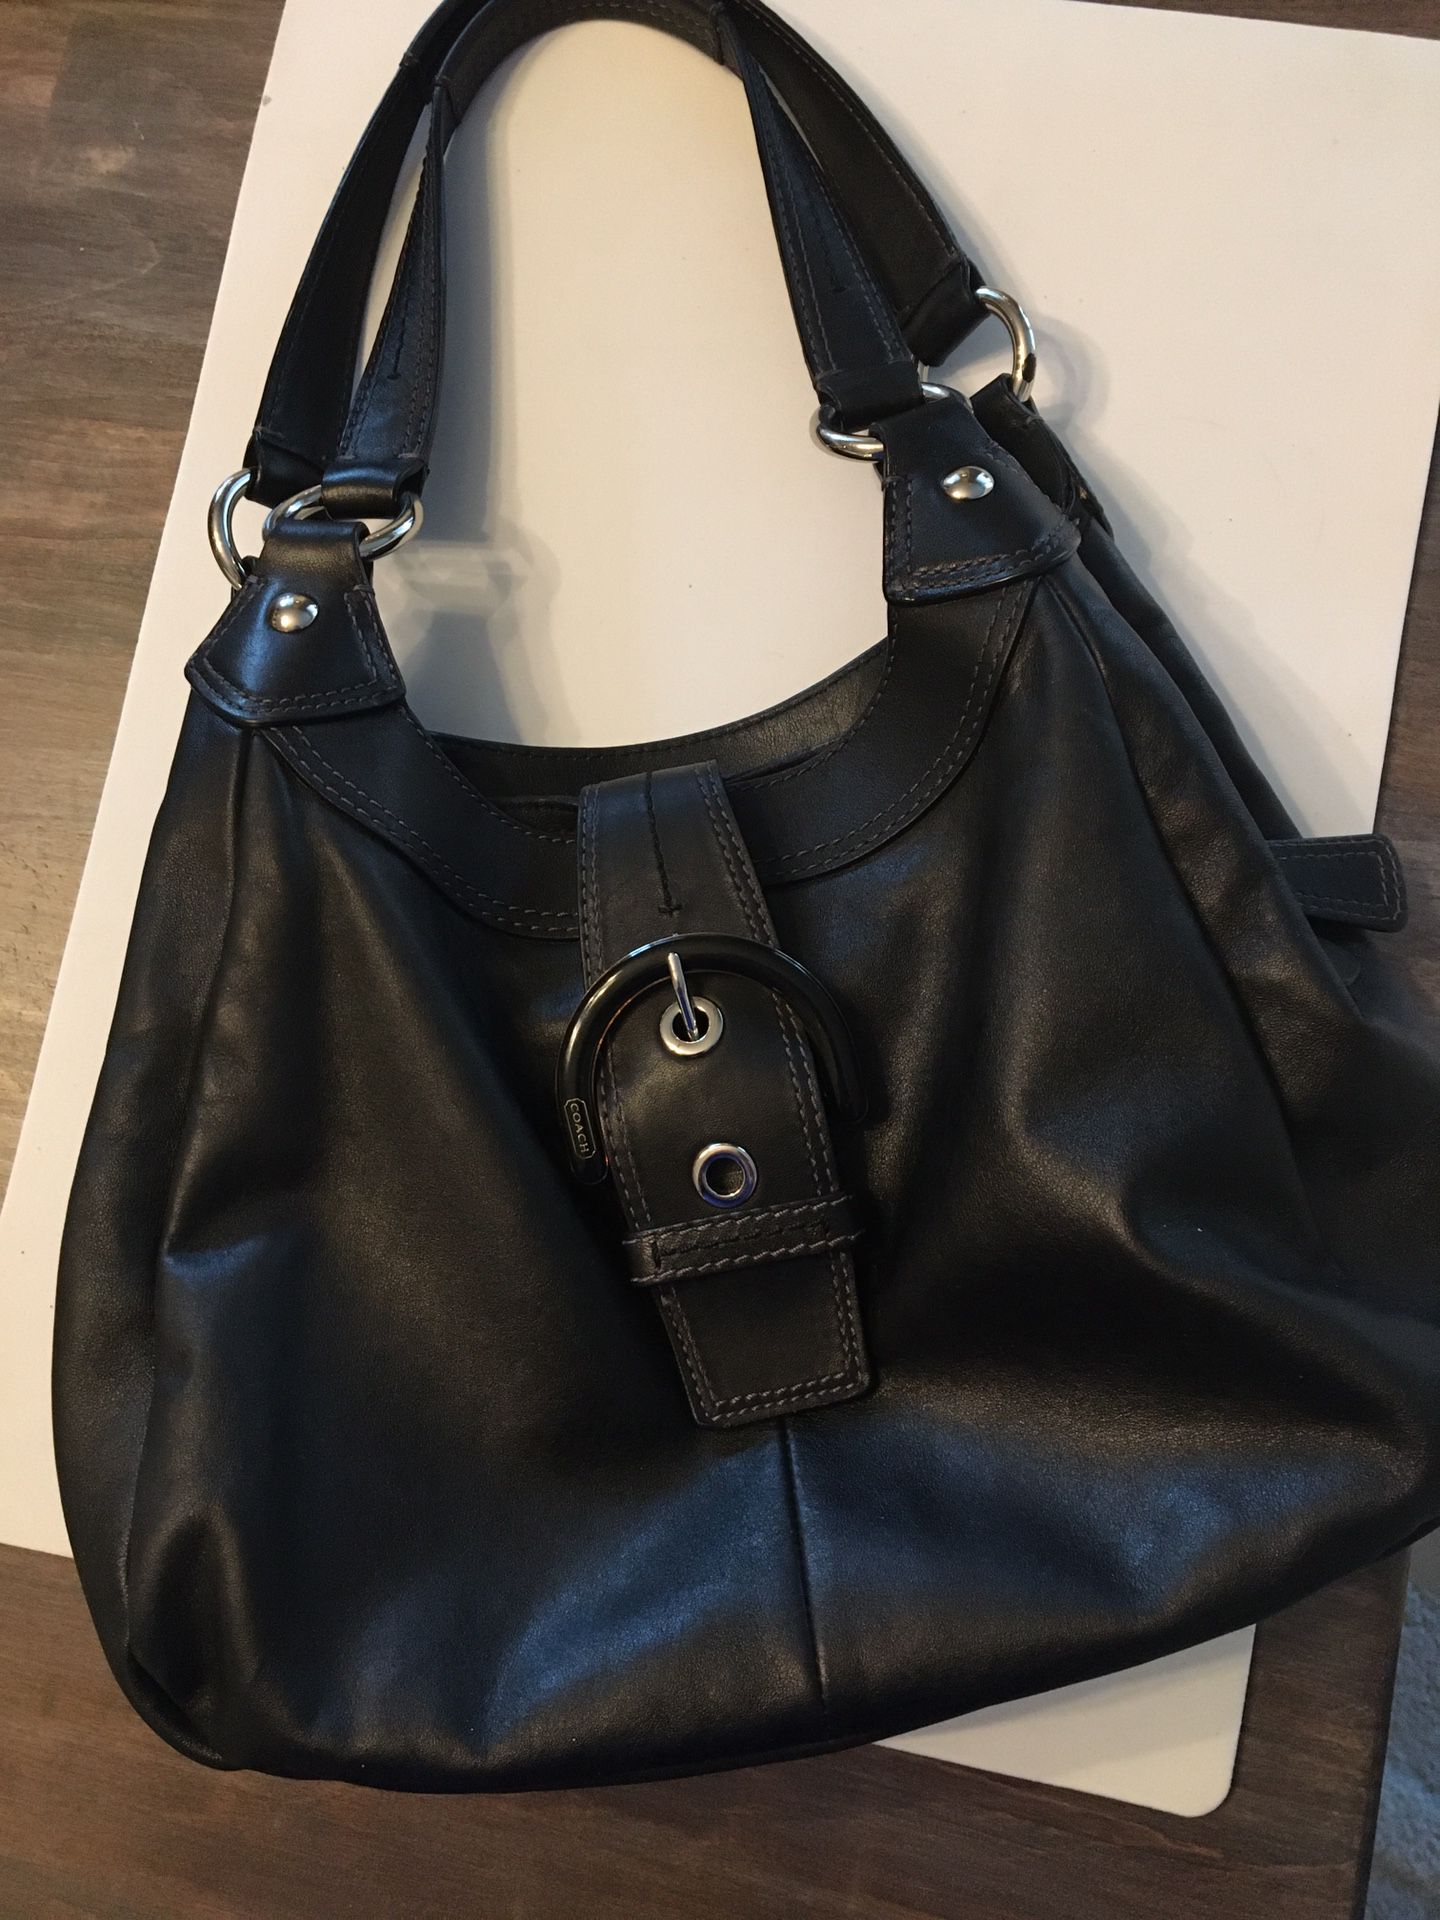 COACH Lynn Soho Black Leather Hobo Bag for Sale in Mesa, AZ - OfferUp